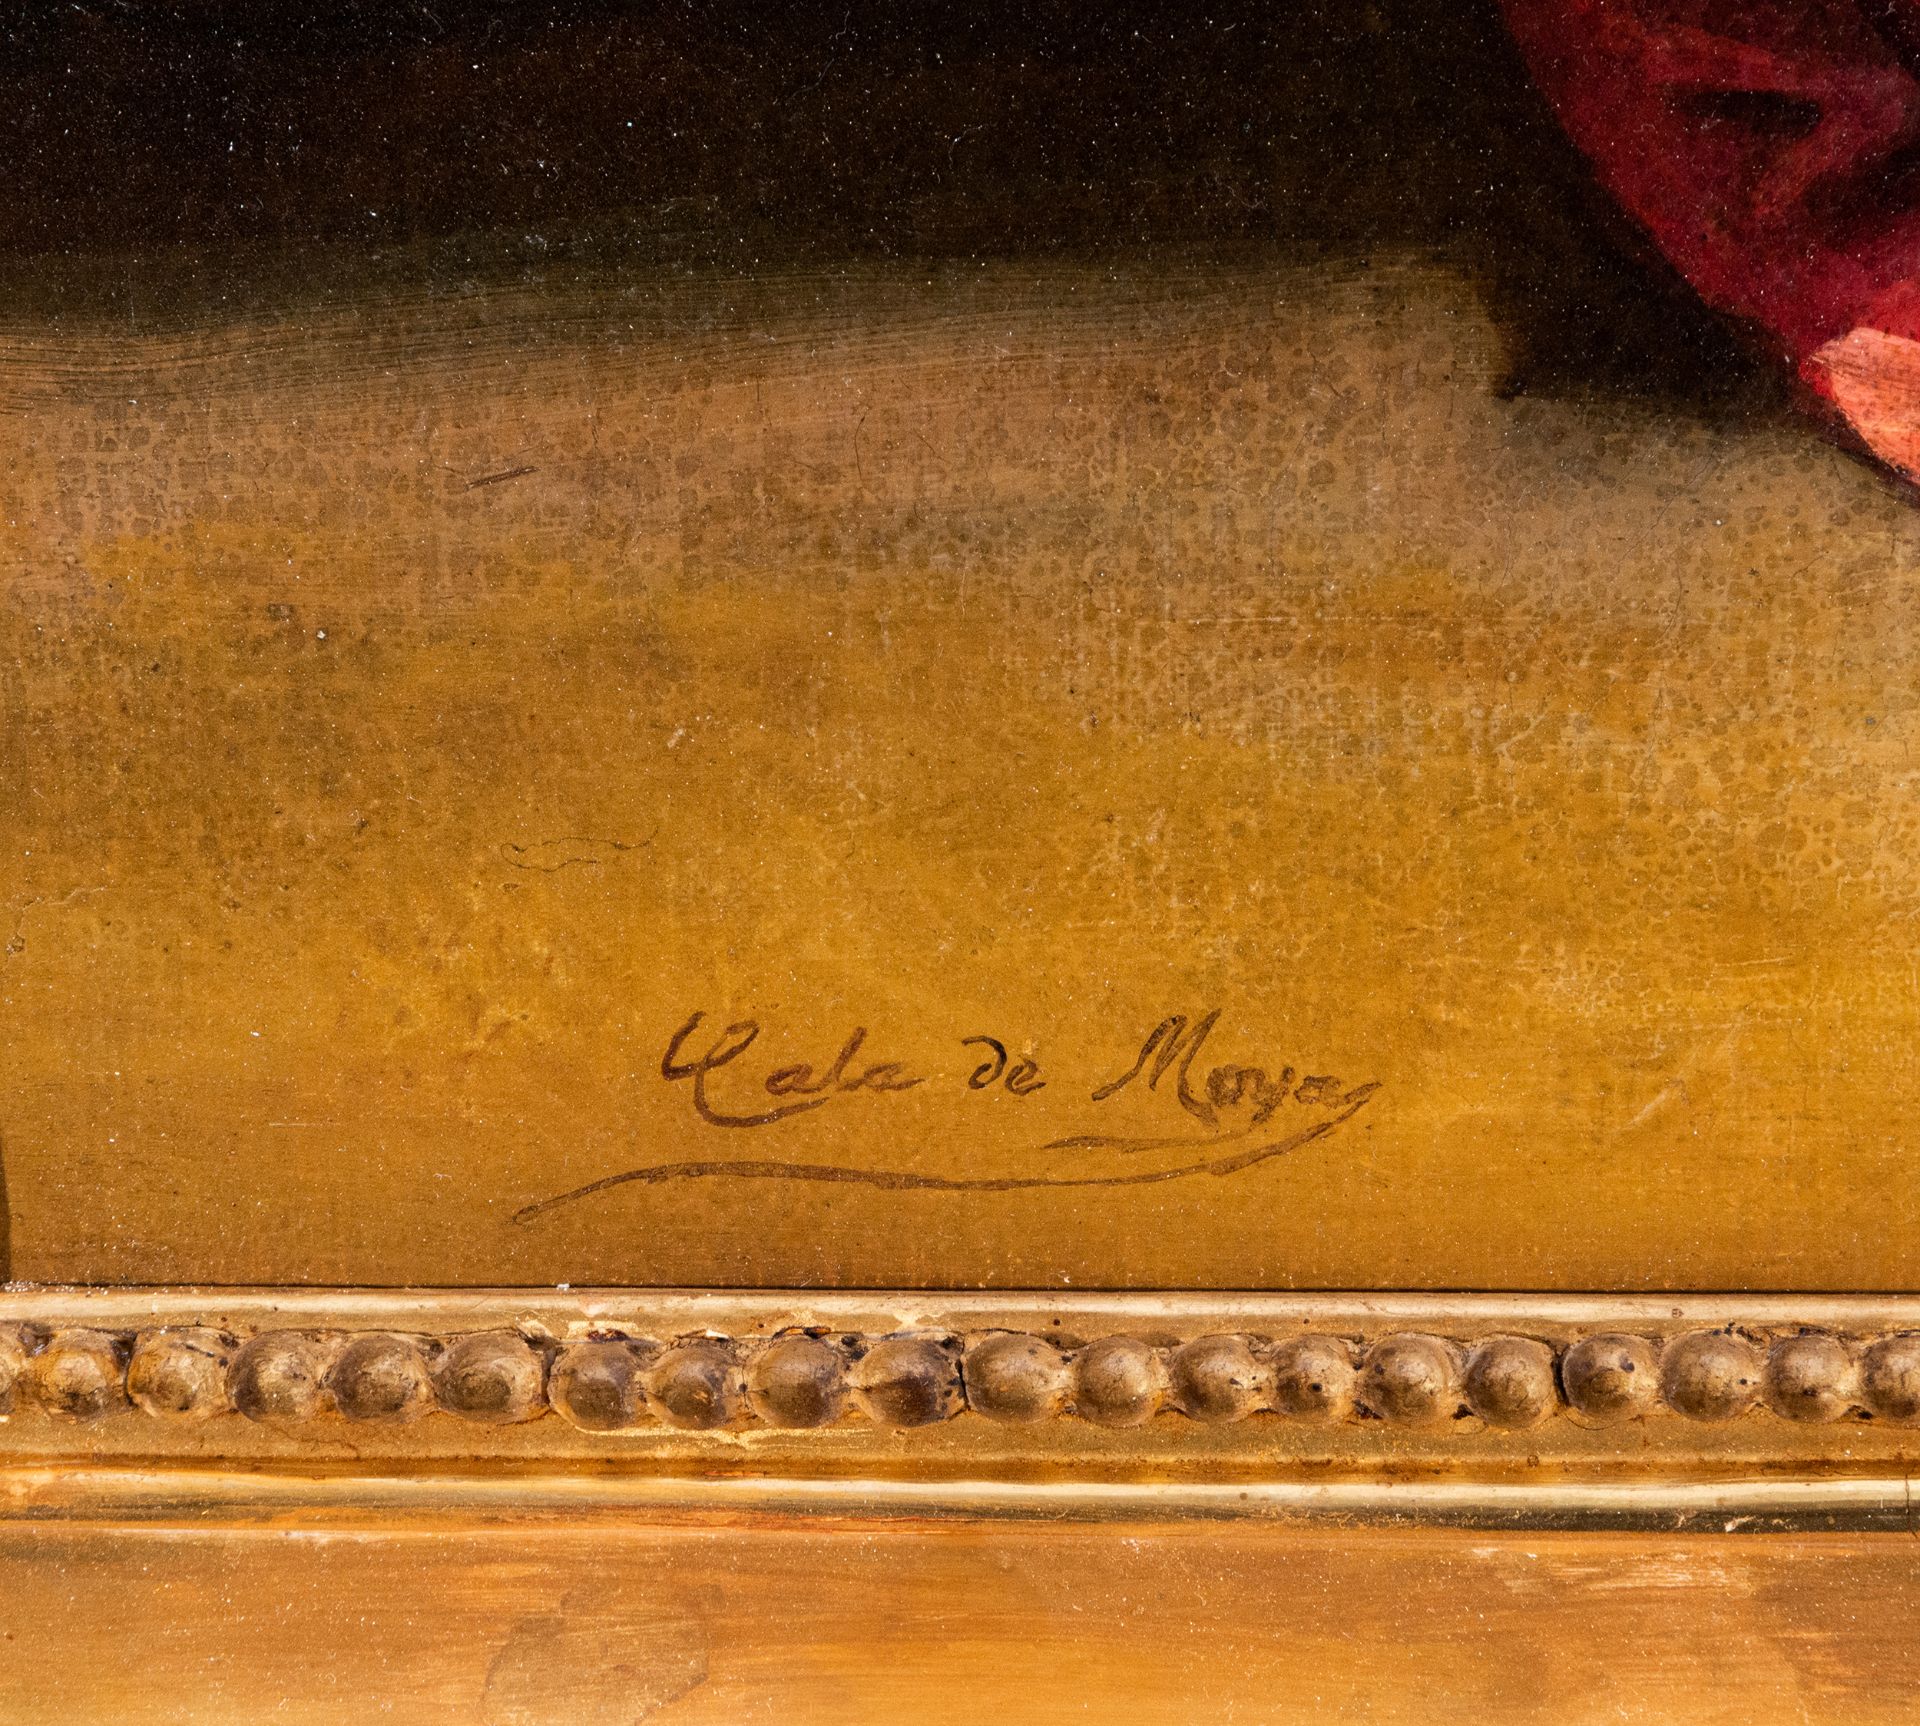 Naked Maja, signed Cala de Moya, 19th century Spanish school - Bild 4 aus 5